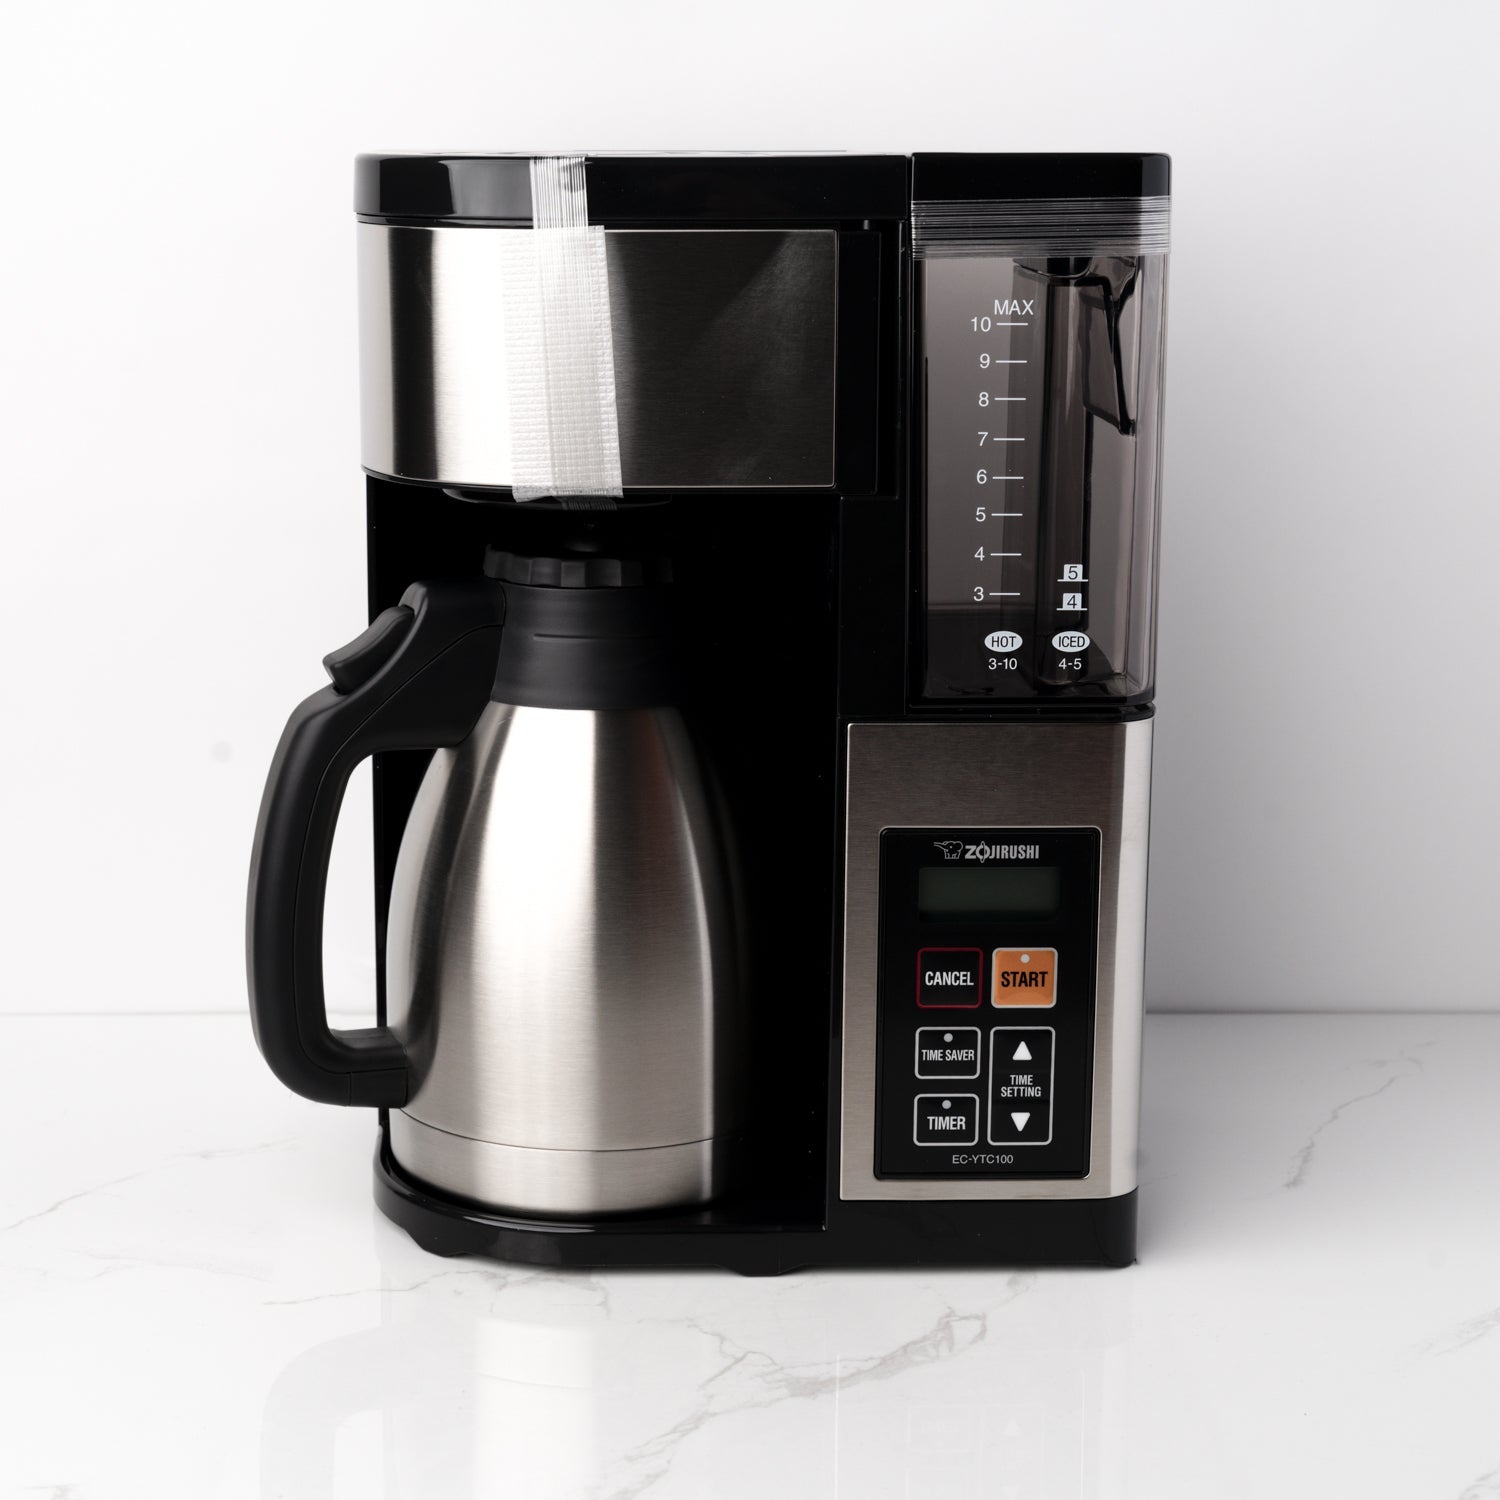 Zojirushi Fresh Brew Plus II Thermal Carafe Coffee Maker EC-YTC100